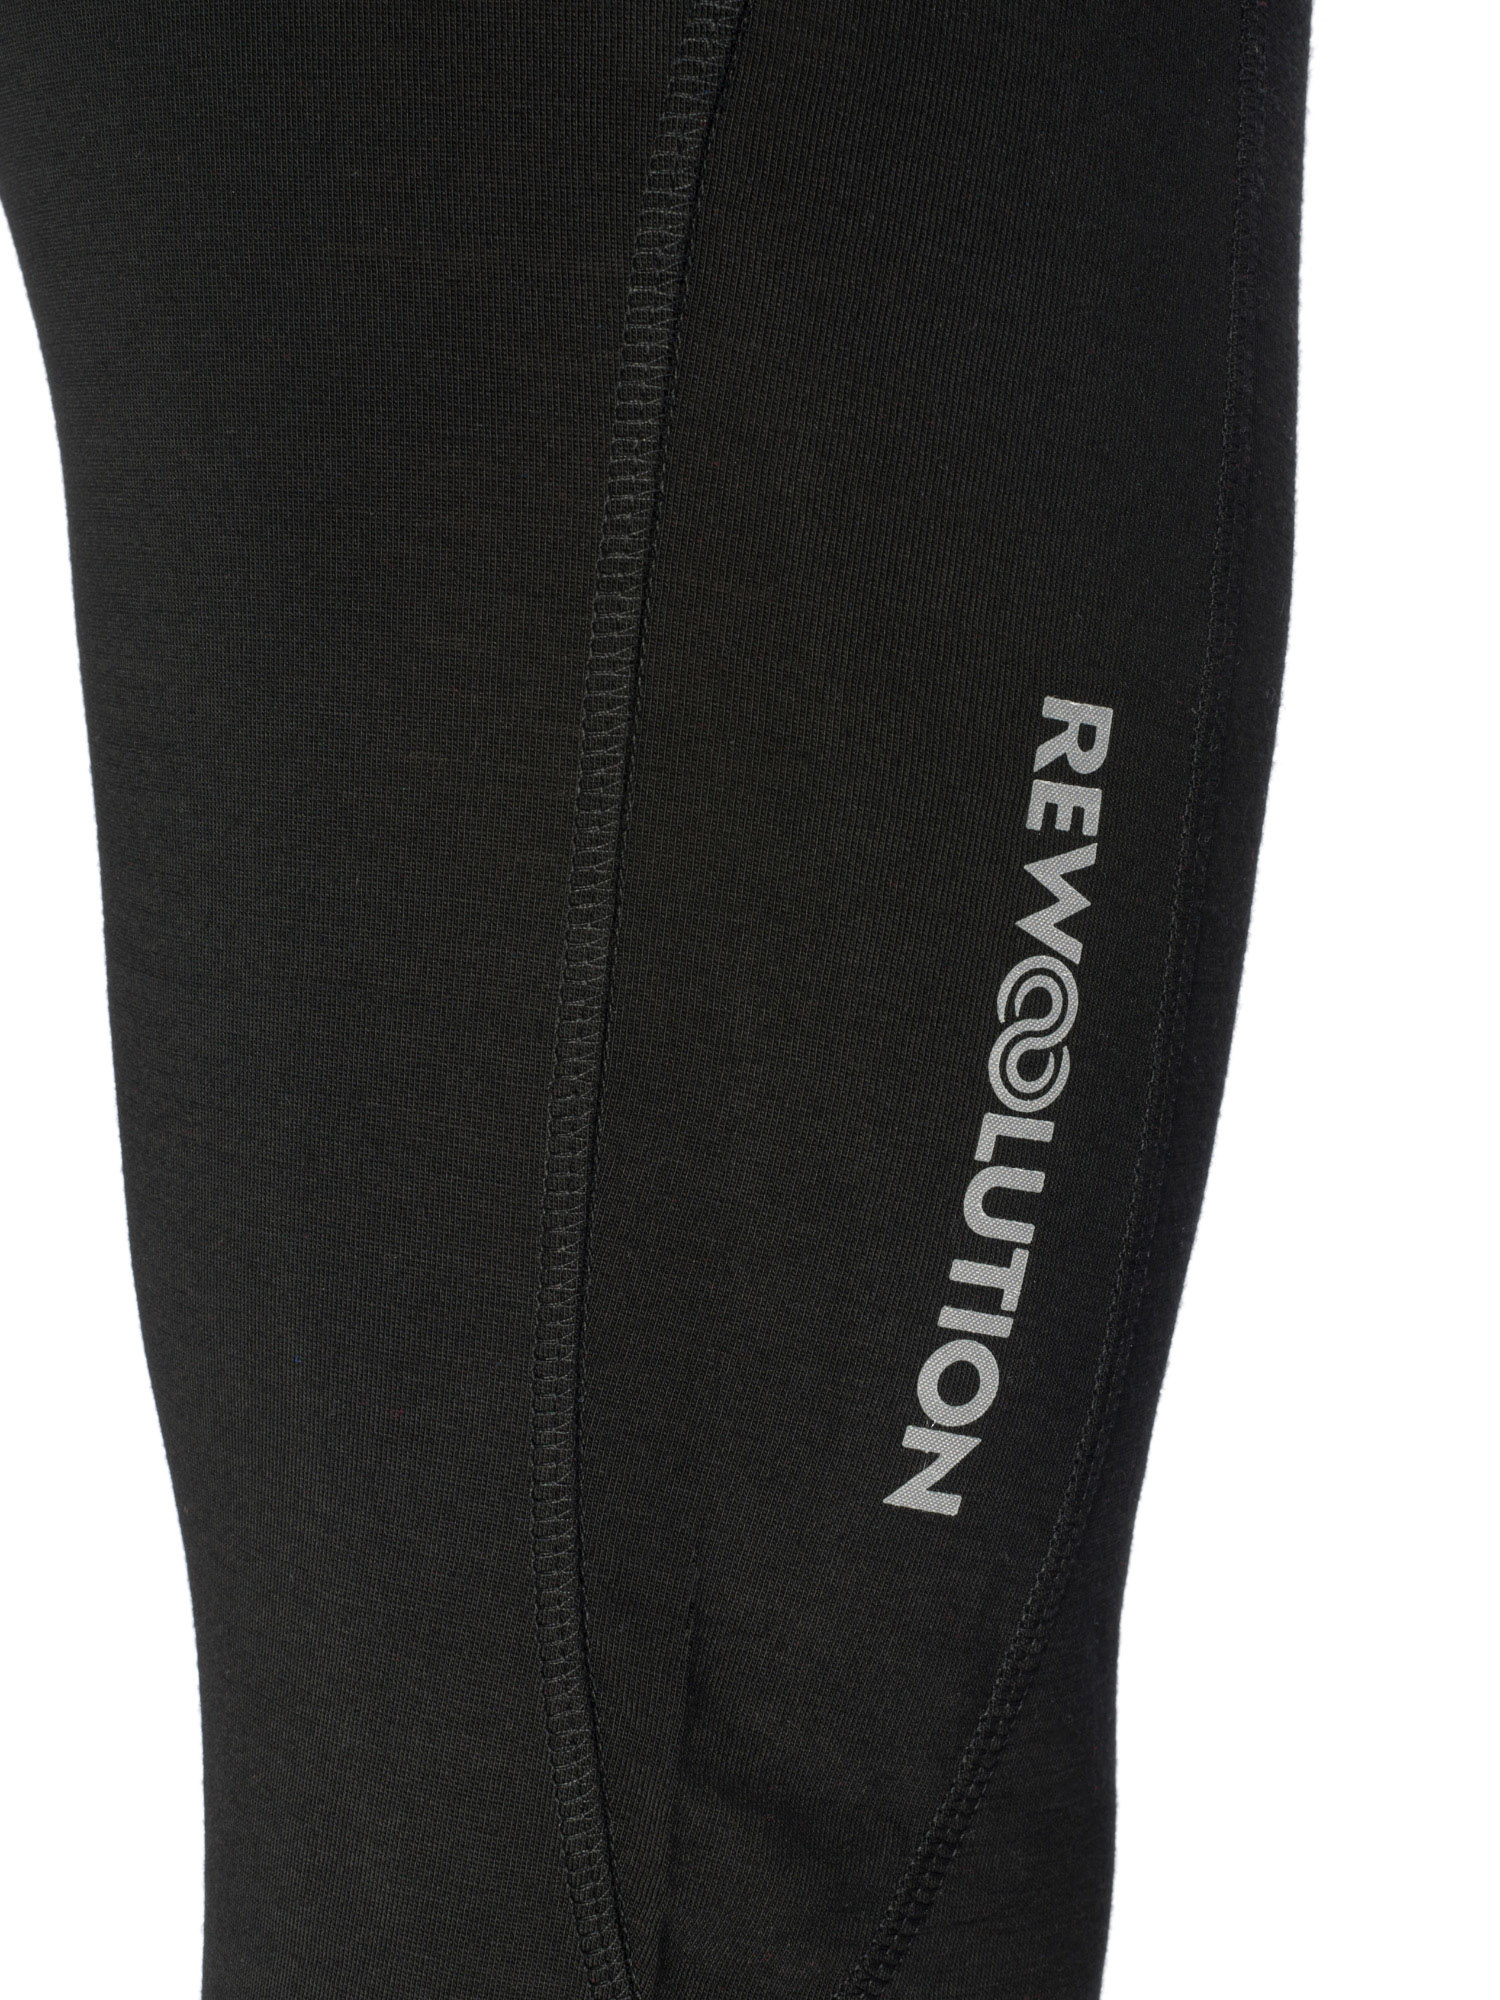 OLYMPIA - black merino jersey 190 gr leggings for woman, Rewoolution